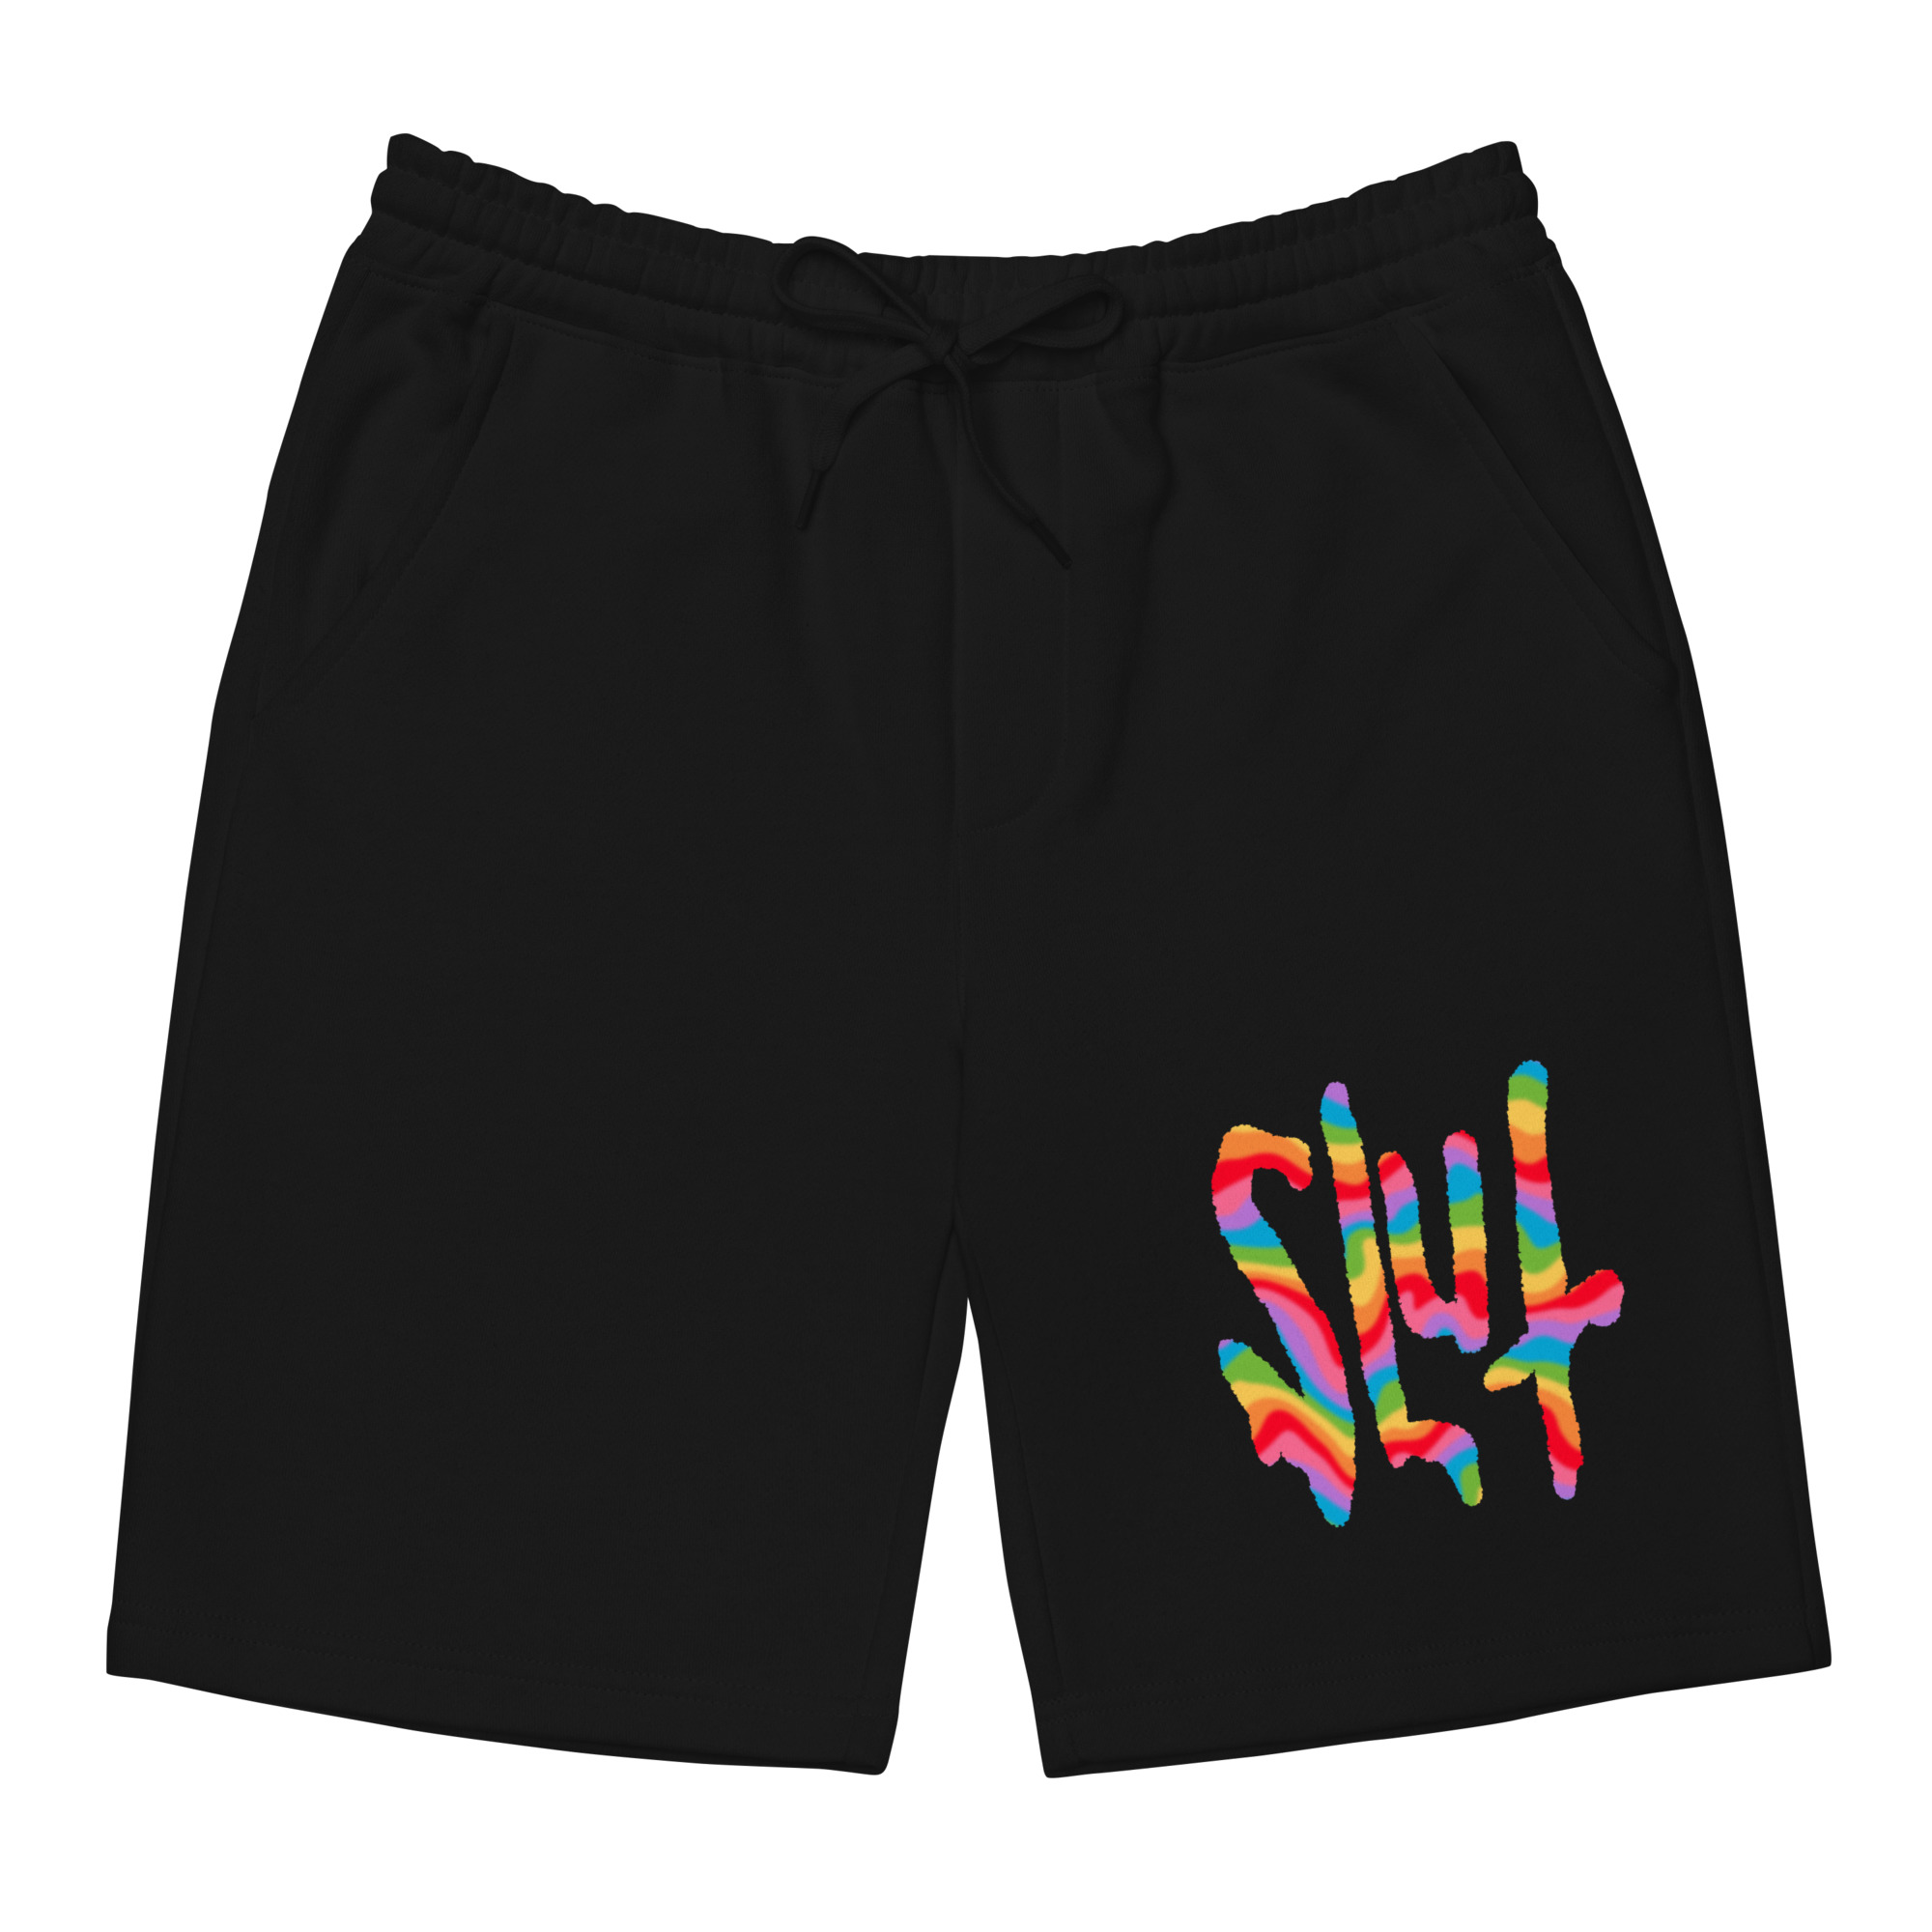 Featured image for “Rainbow SLUT pride - Men's fleece shorts”